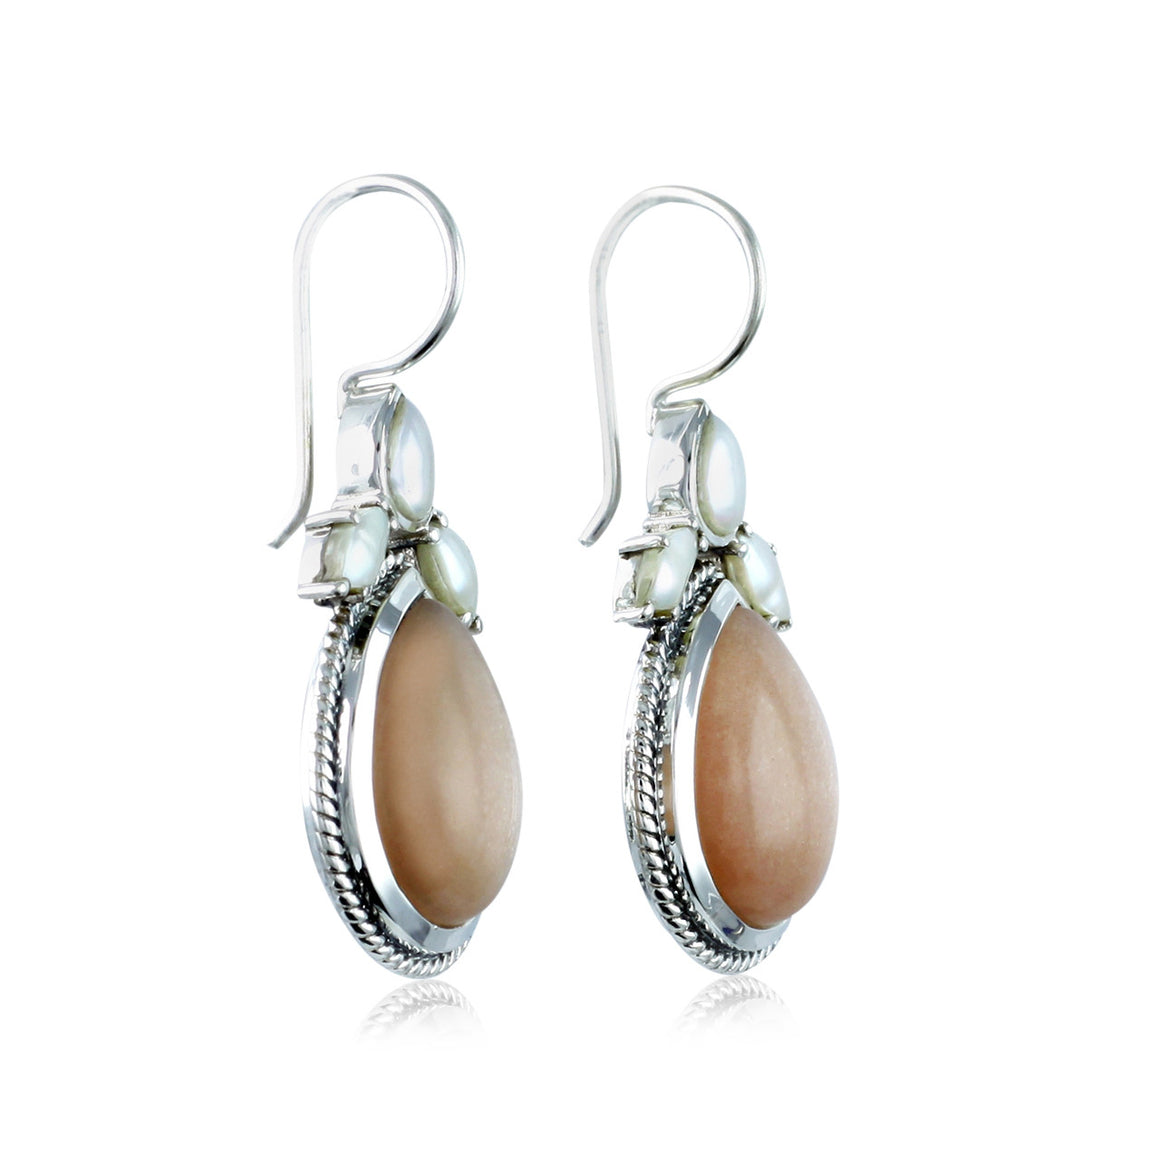 Peach Moonstone and White Pearl Earrings